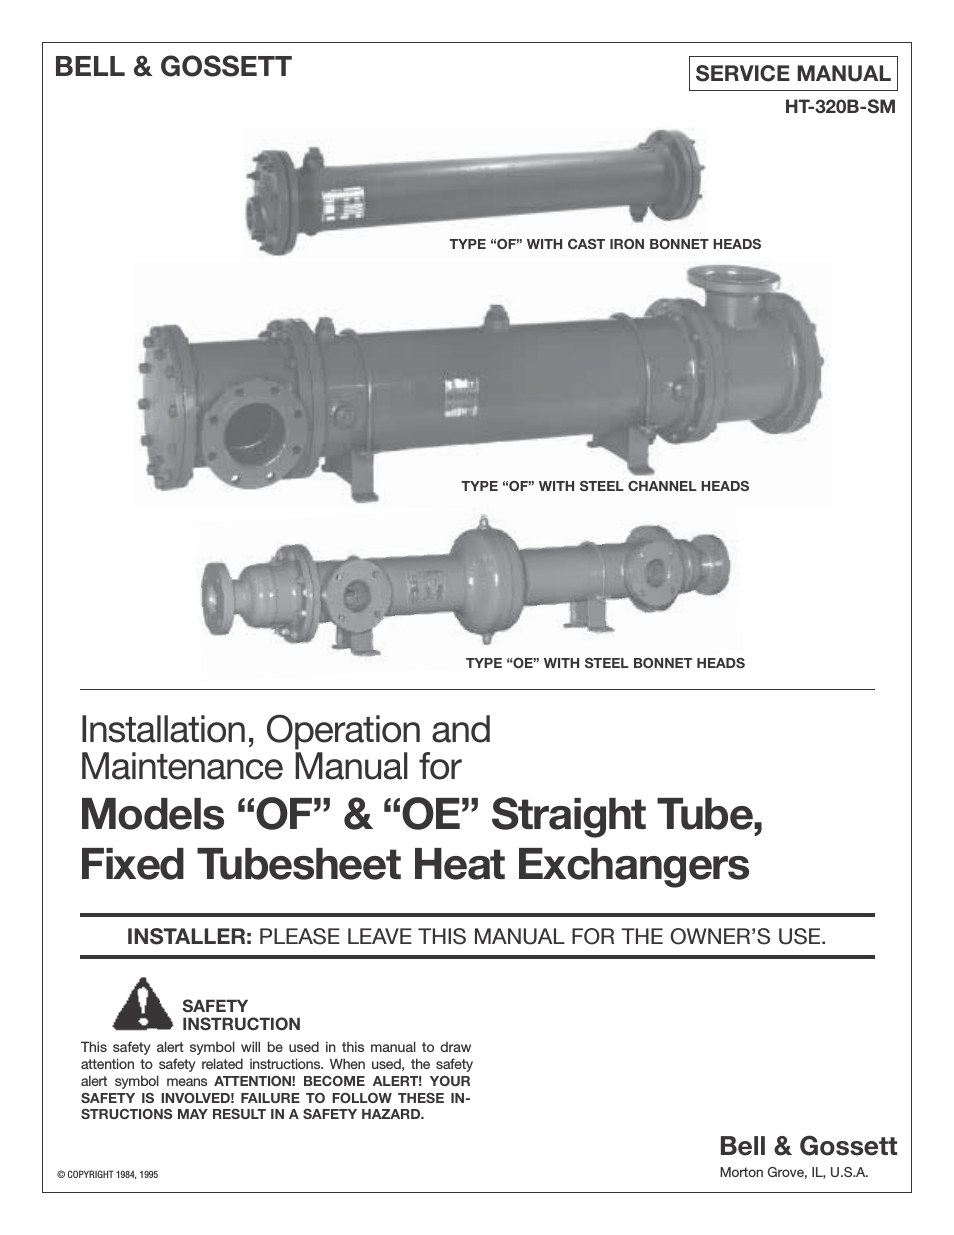 HT 320B SM Models “OF” Straight Tube, Fixed Tubesheet Heat Exchangers